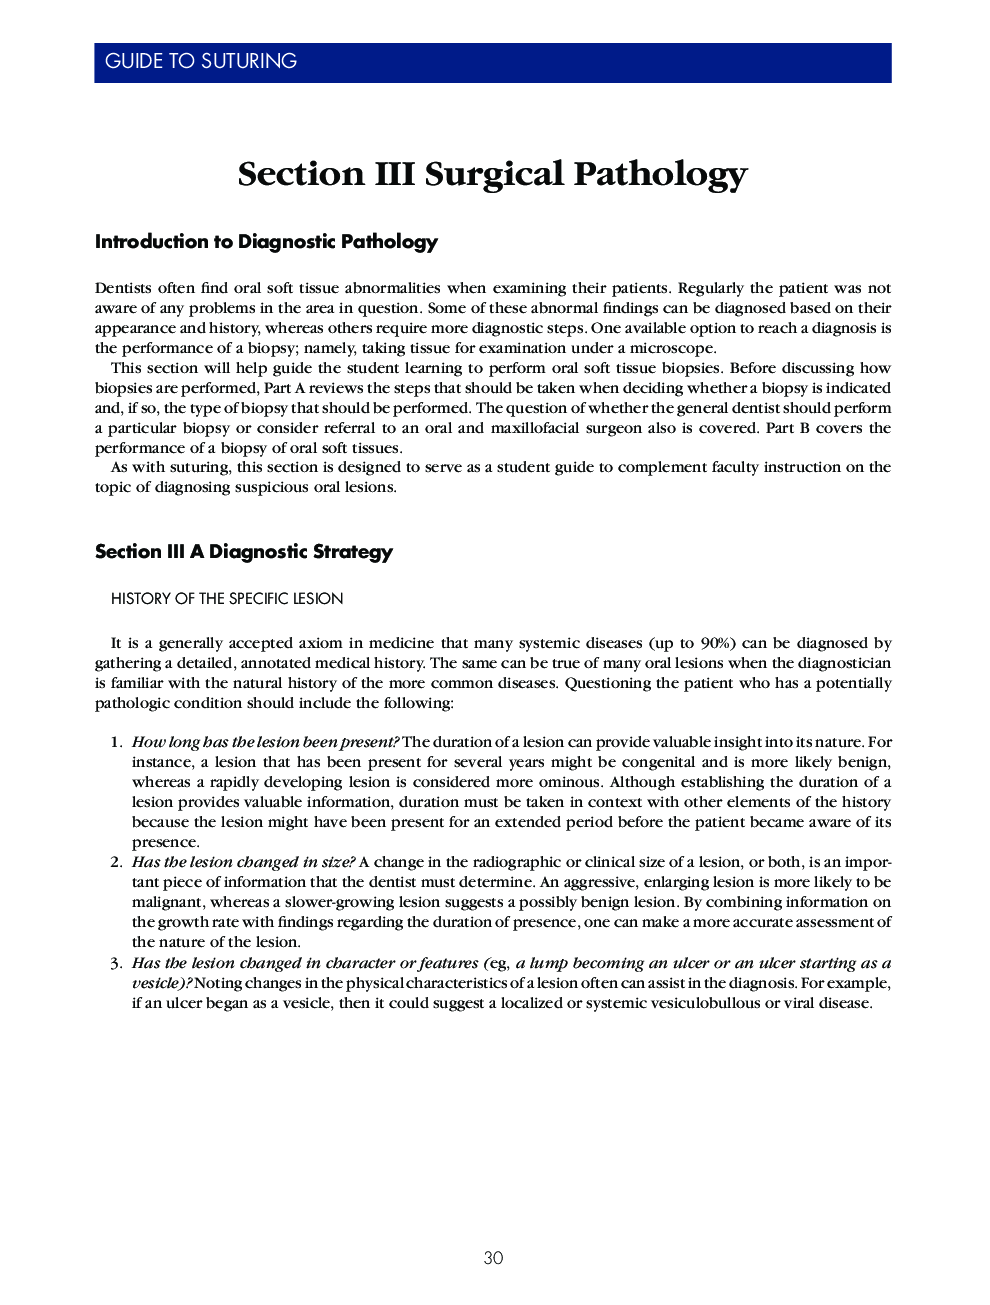 Section III Surgical Pathology